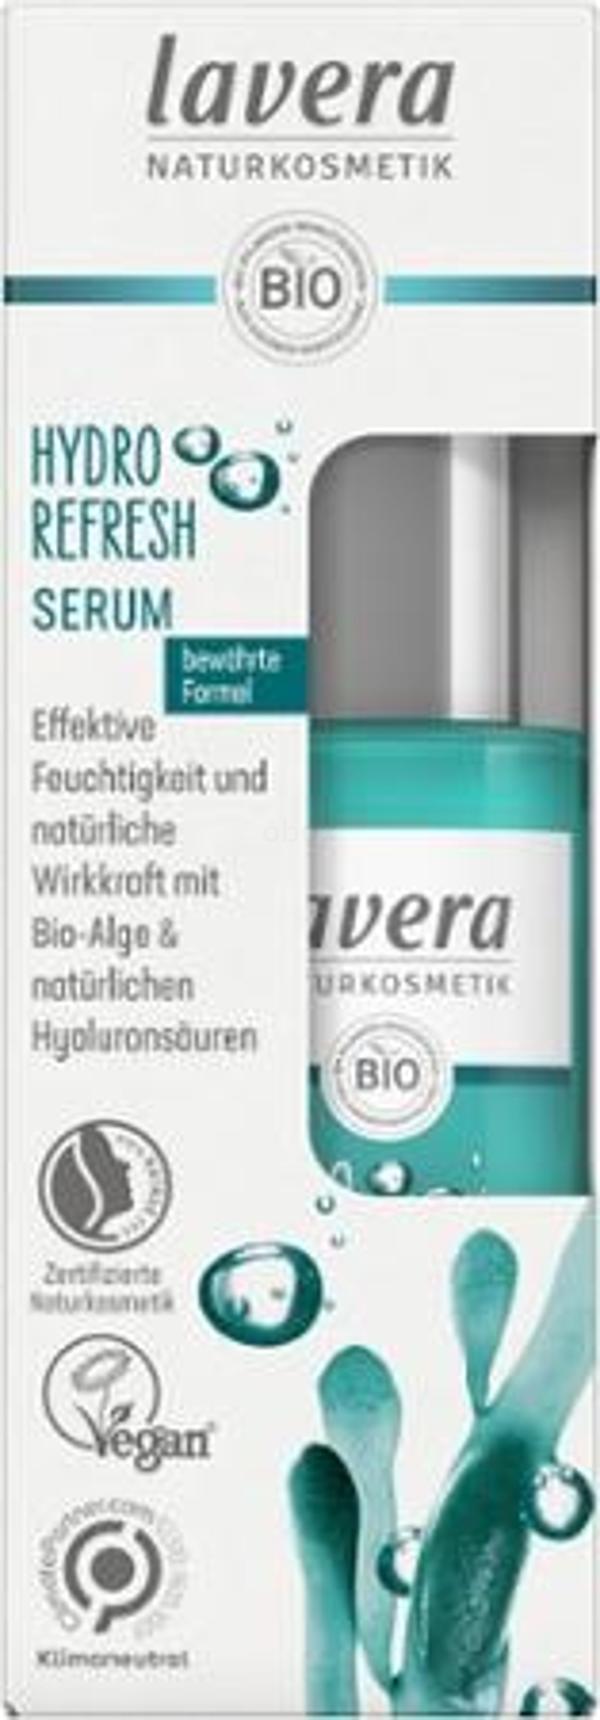 Produktfoto zu Hydro Refresh Serum